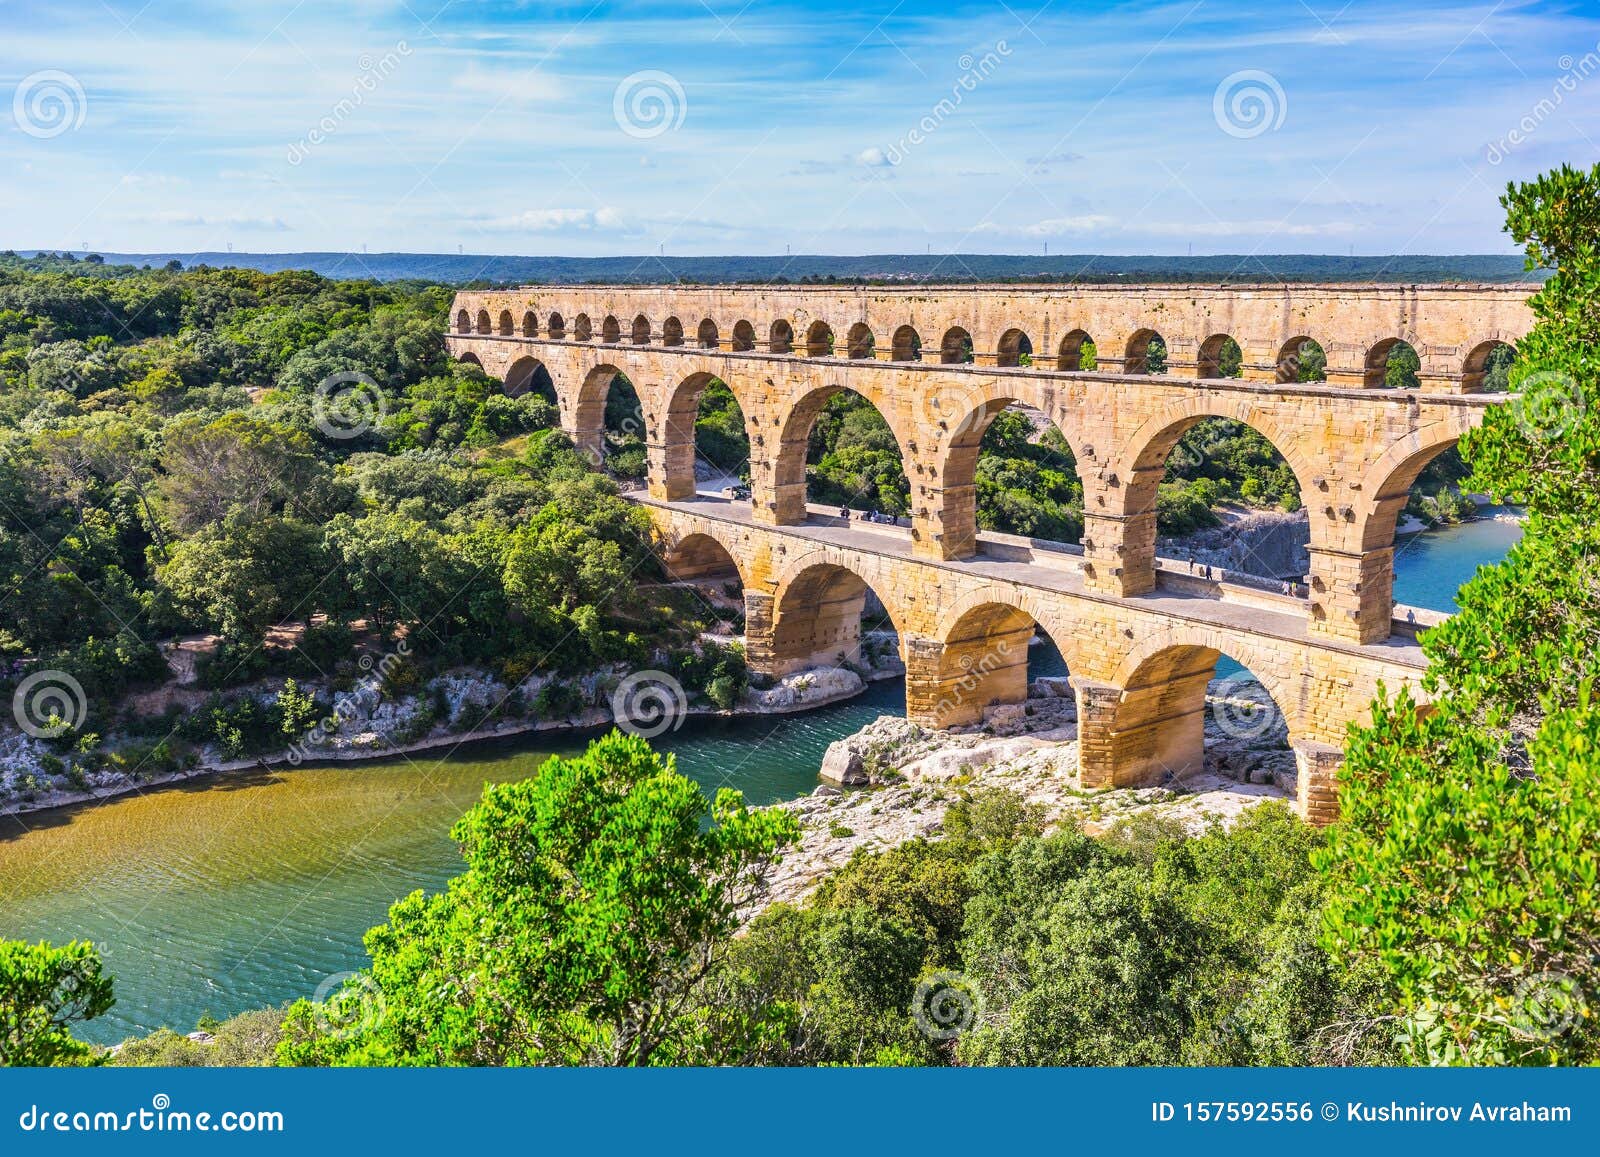 three-tiered aqueduct pont du gard and natural park